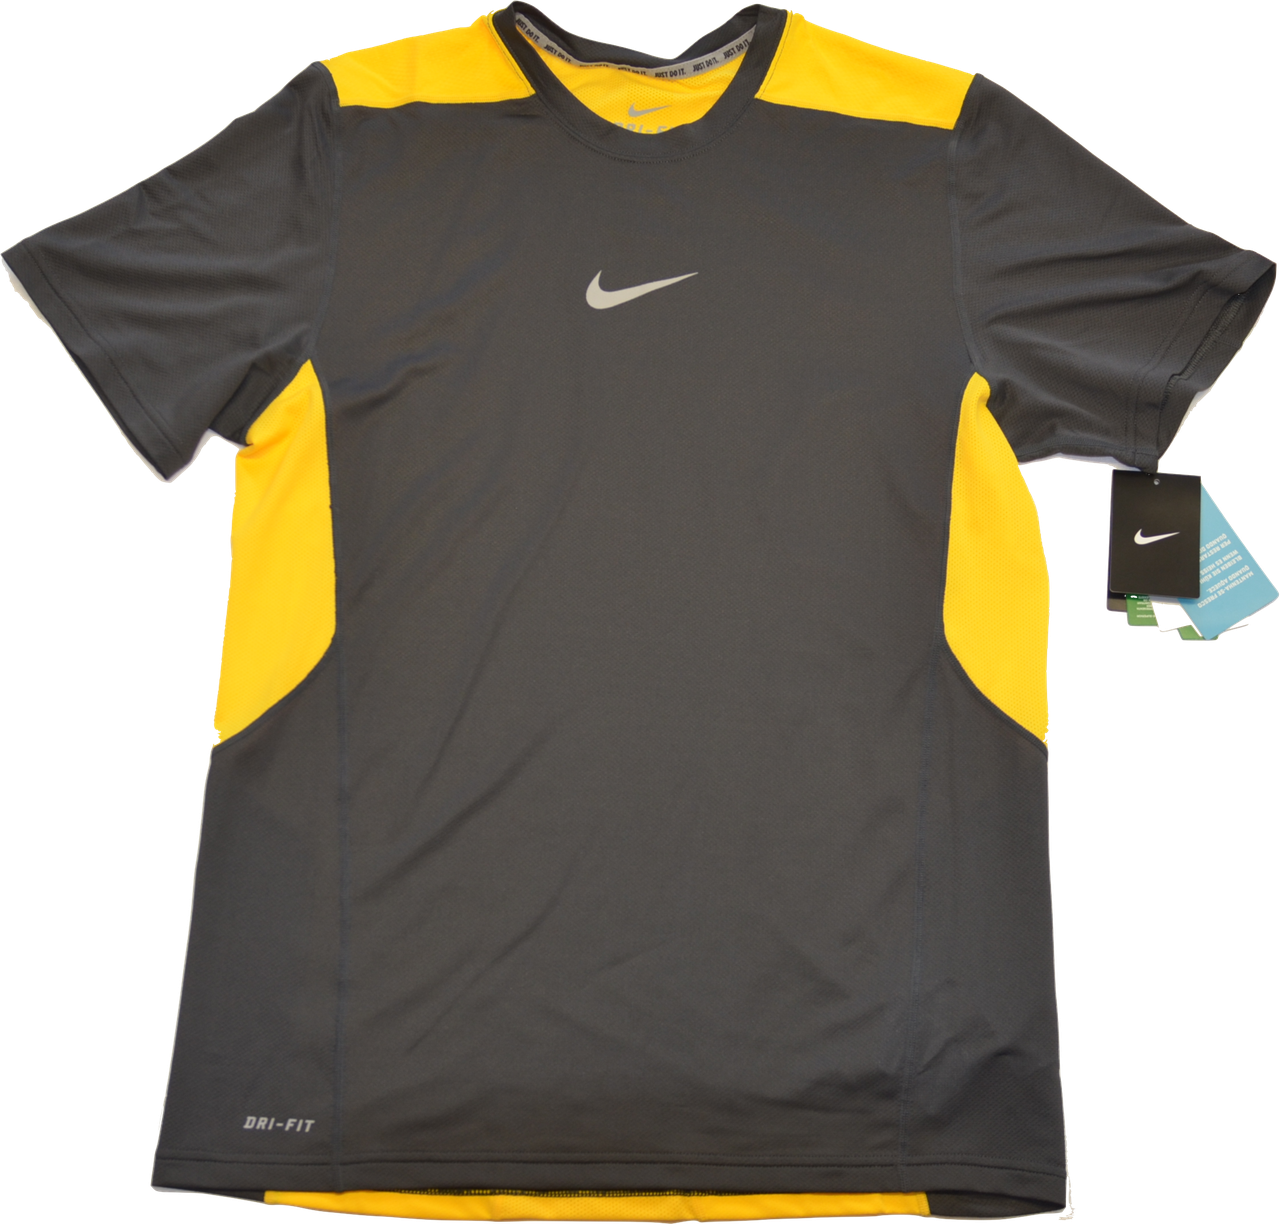 Чоловіча спортивна футболка Nike.